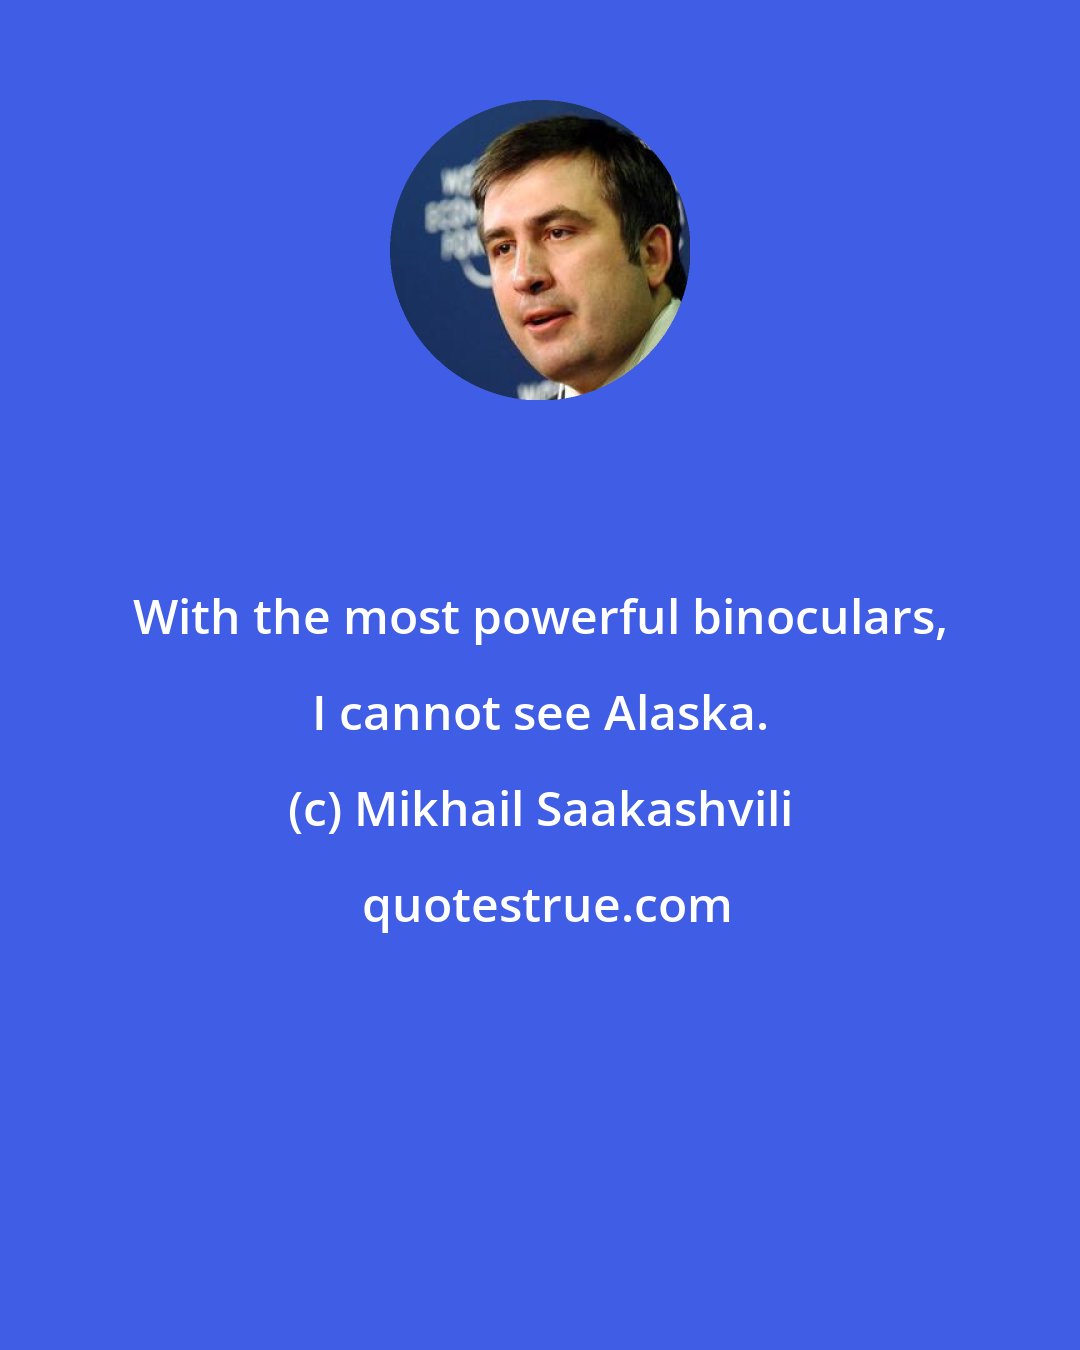 Mikhail Saakashvili: With the most powerful binoculars, I cannot see Alaska.